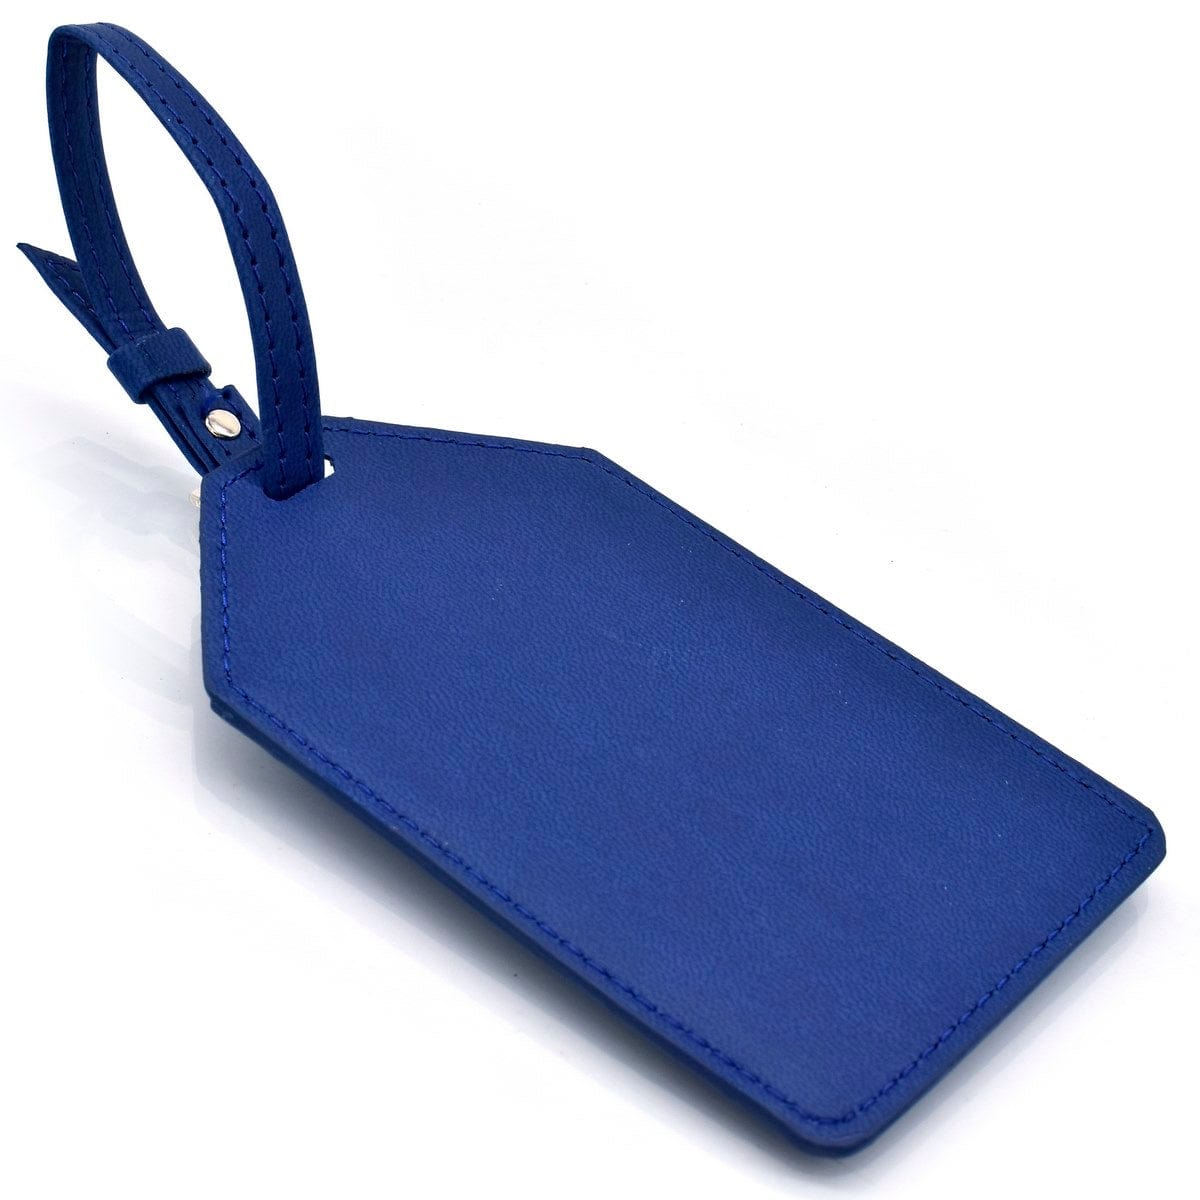 jags-mumbai Household Goods Luggage Tag Leatherette Blue